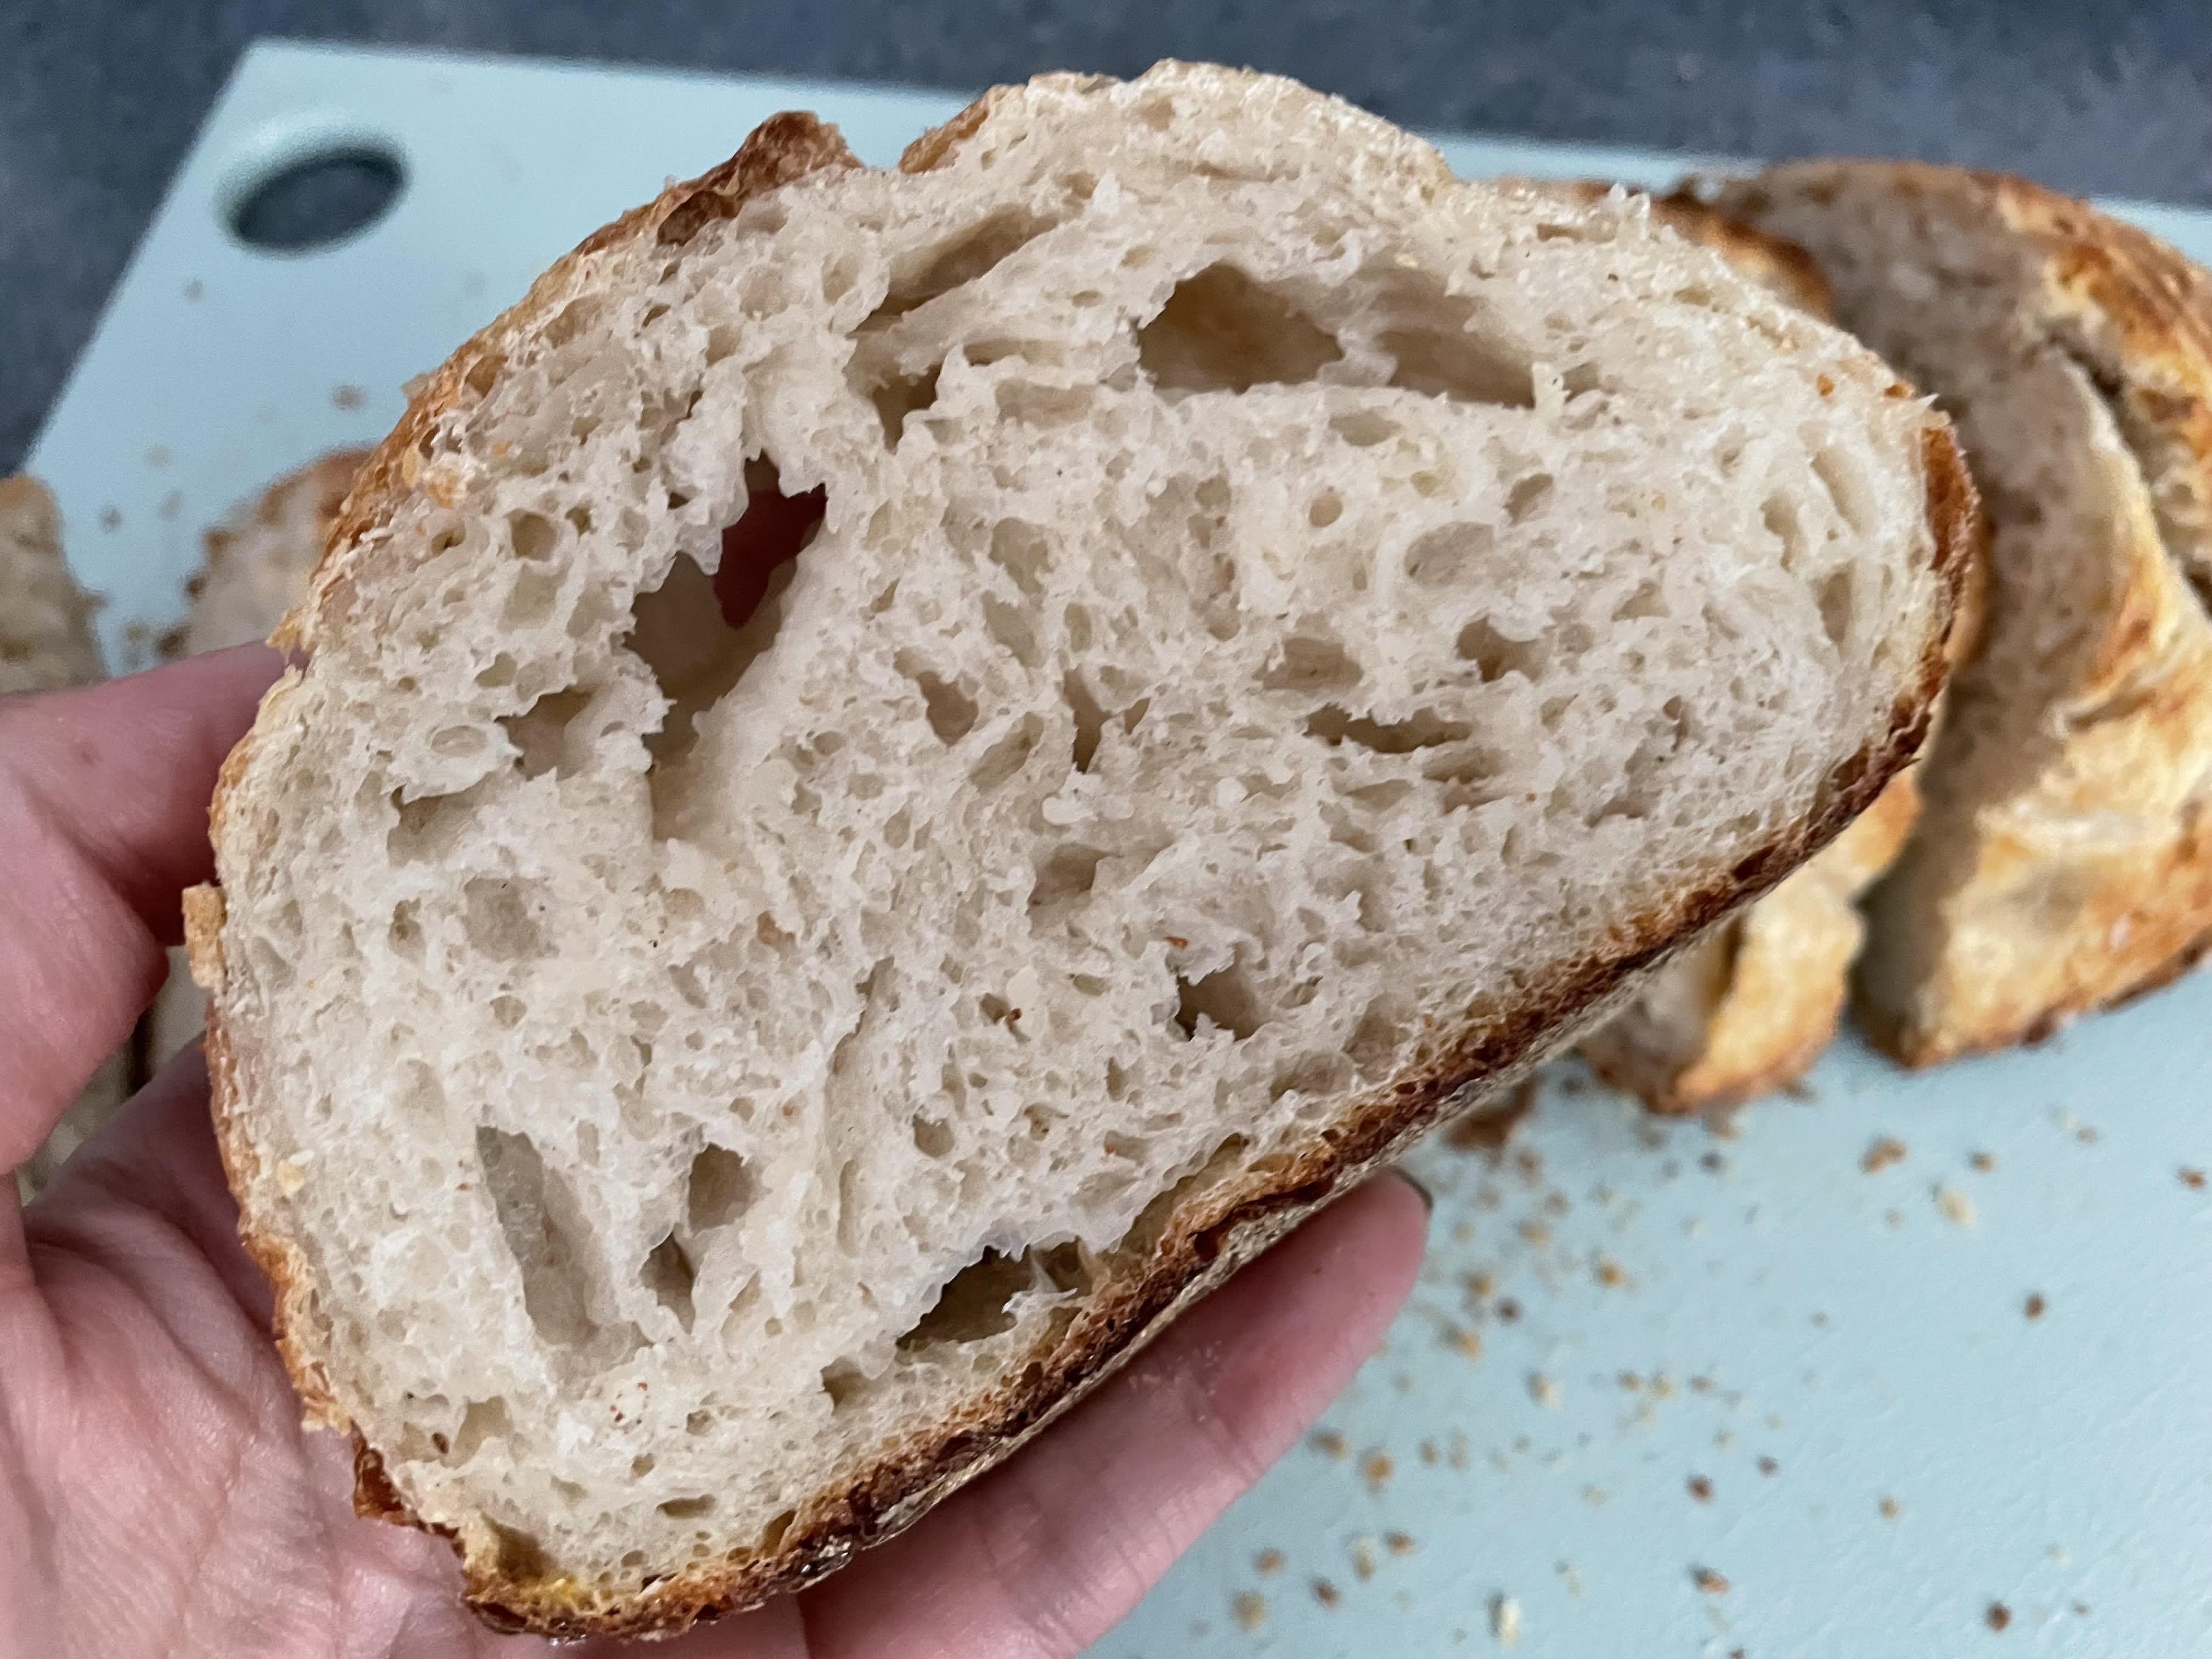 Wildgrain Review - Bread, Pasta, Pastries